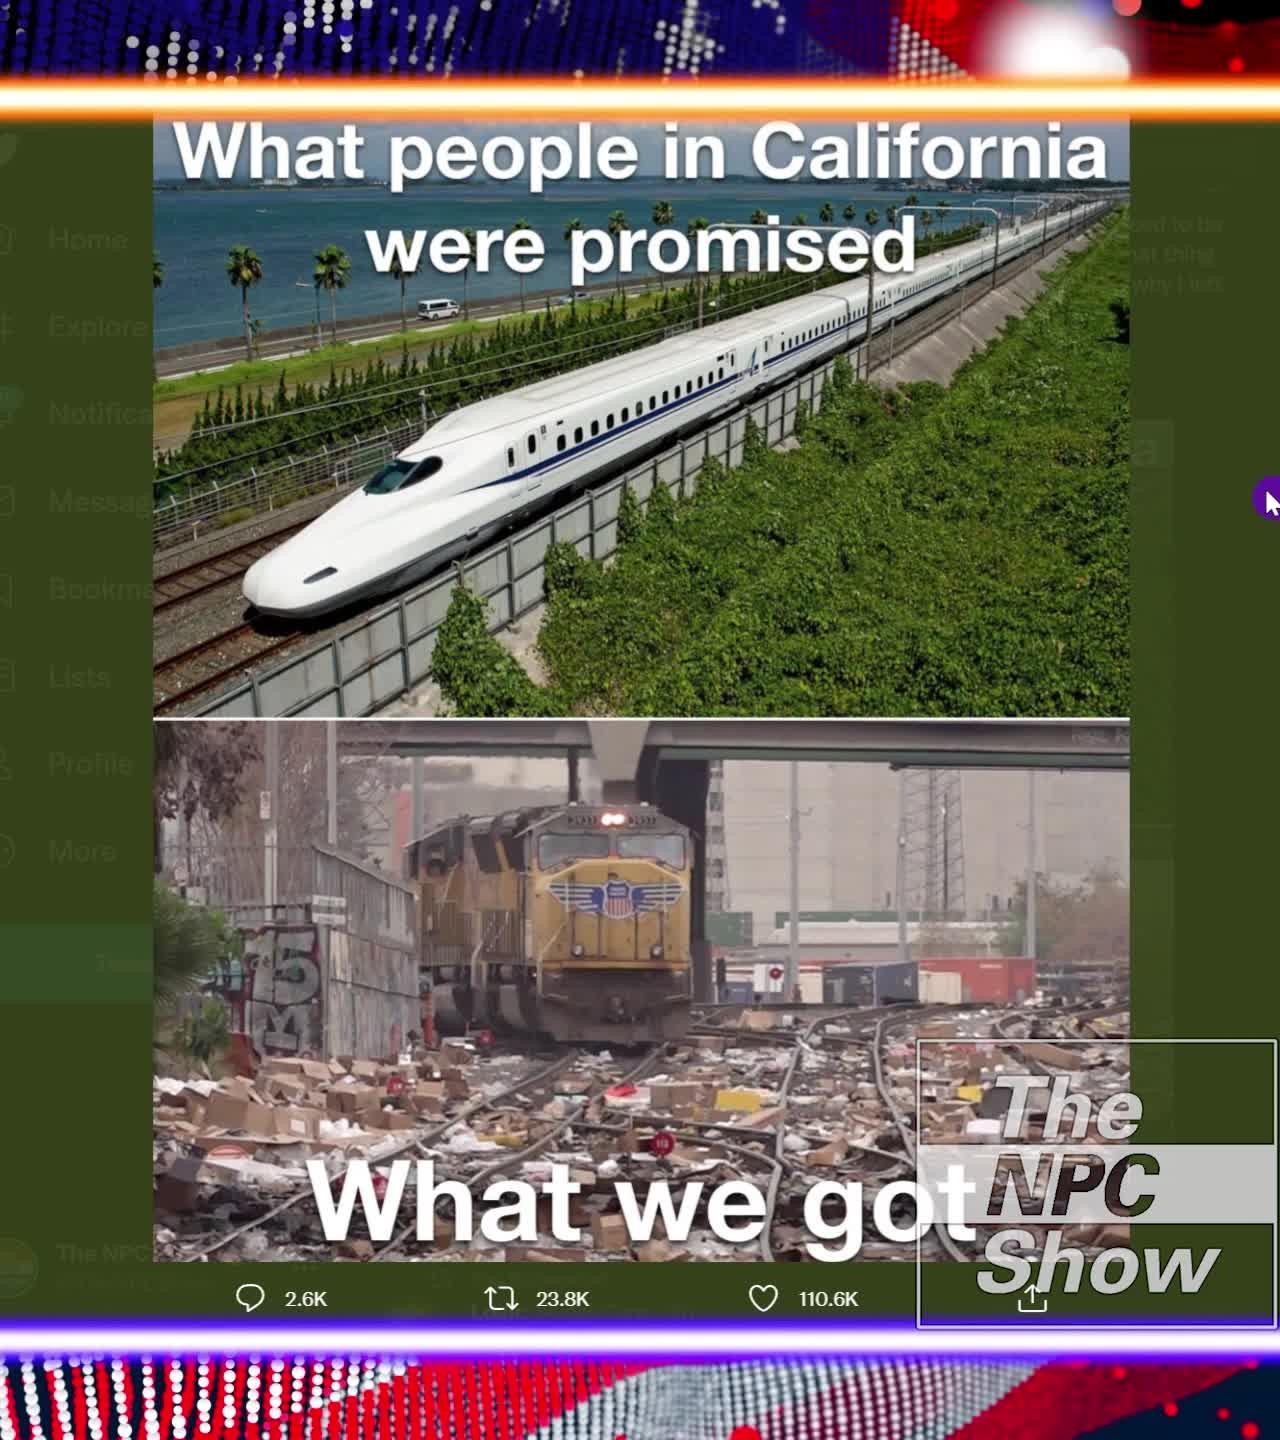 California Bullet Train Projectd Was A Tax Scam